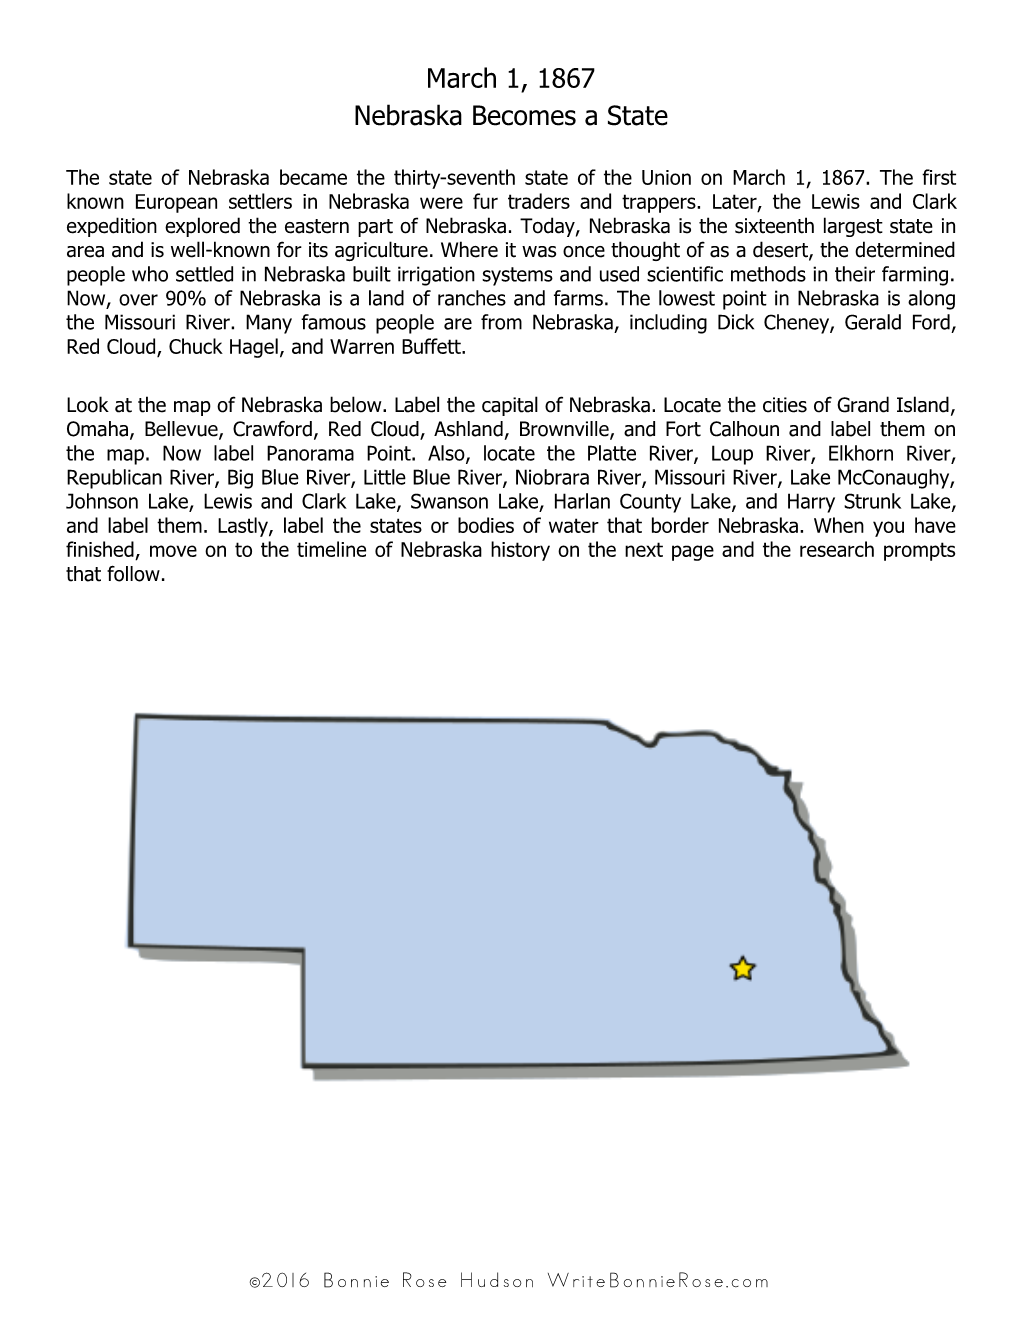 March 1, 1867 Nebraska Becomes a State